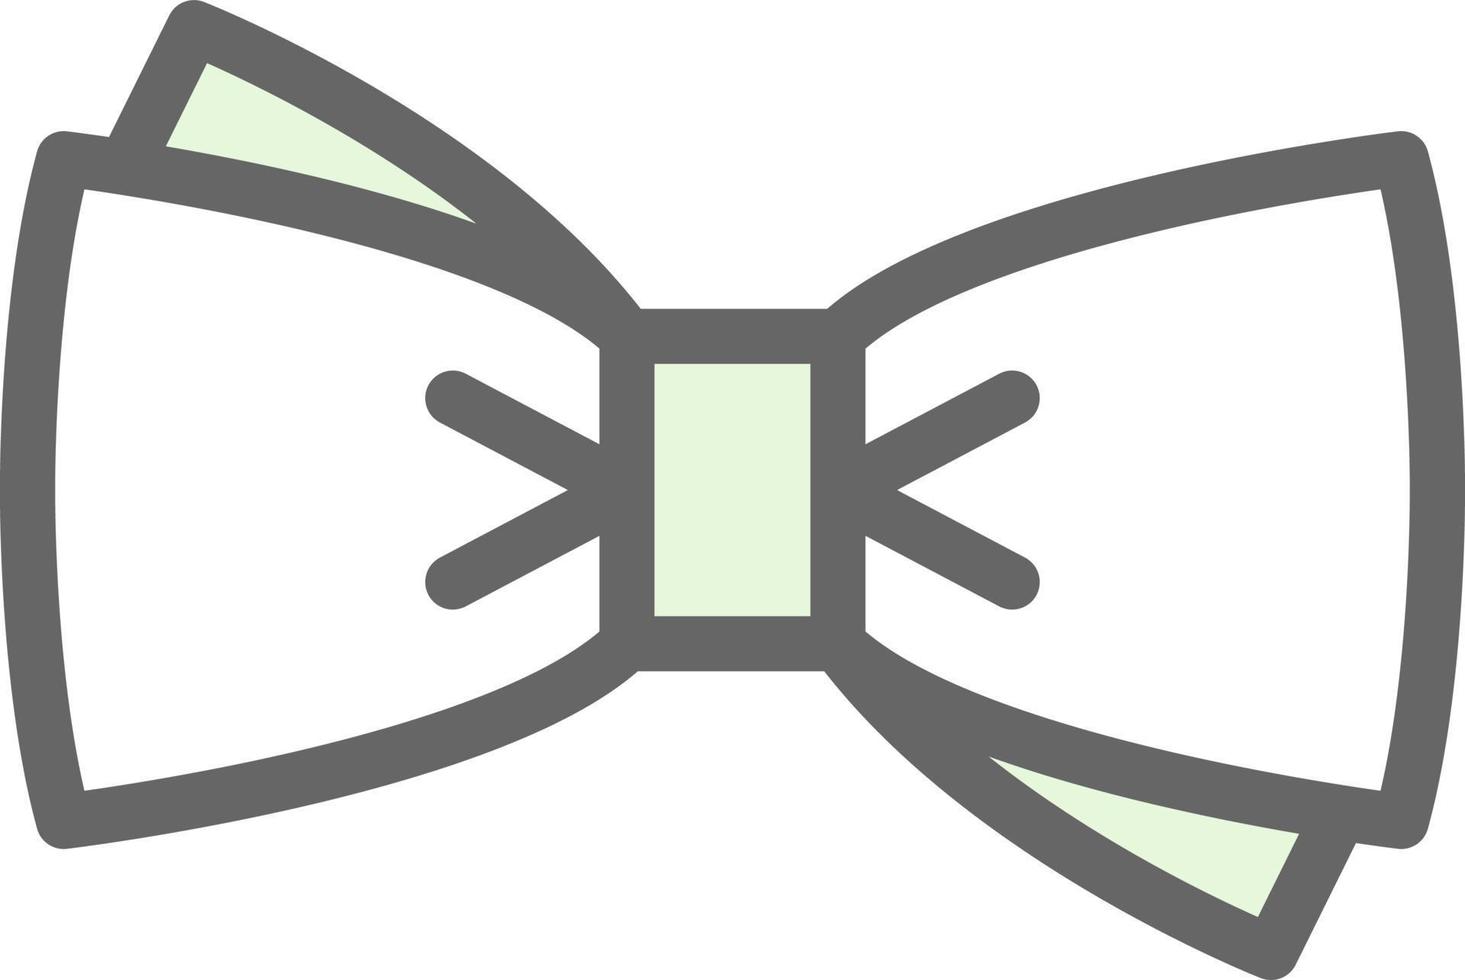 design de ícone de vetor de gravata borboleta